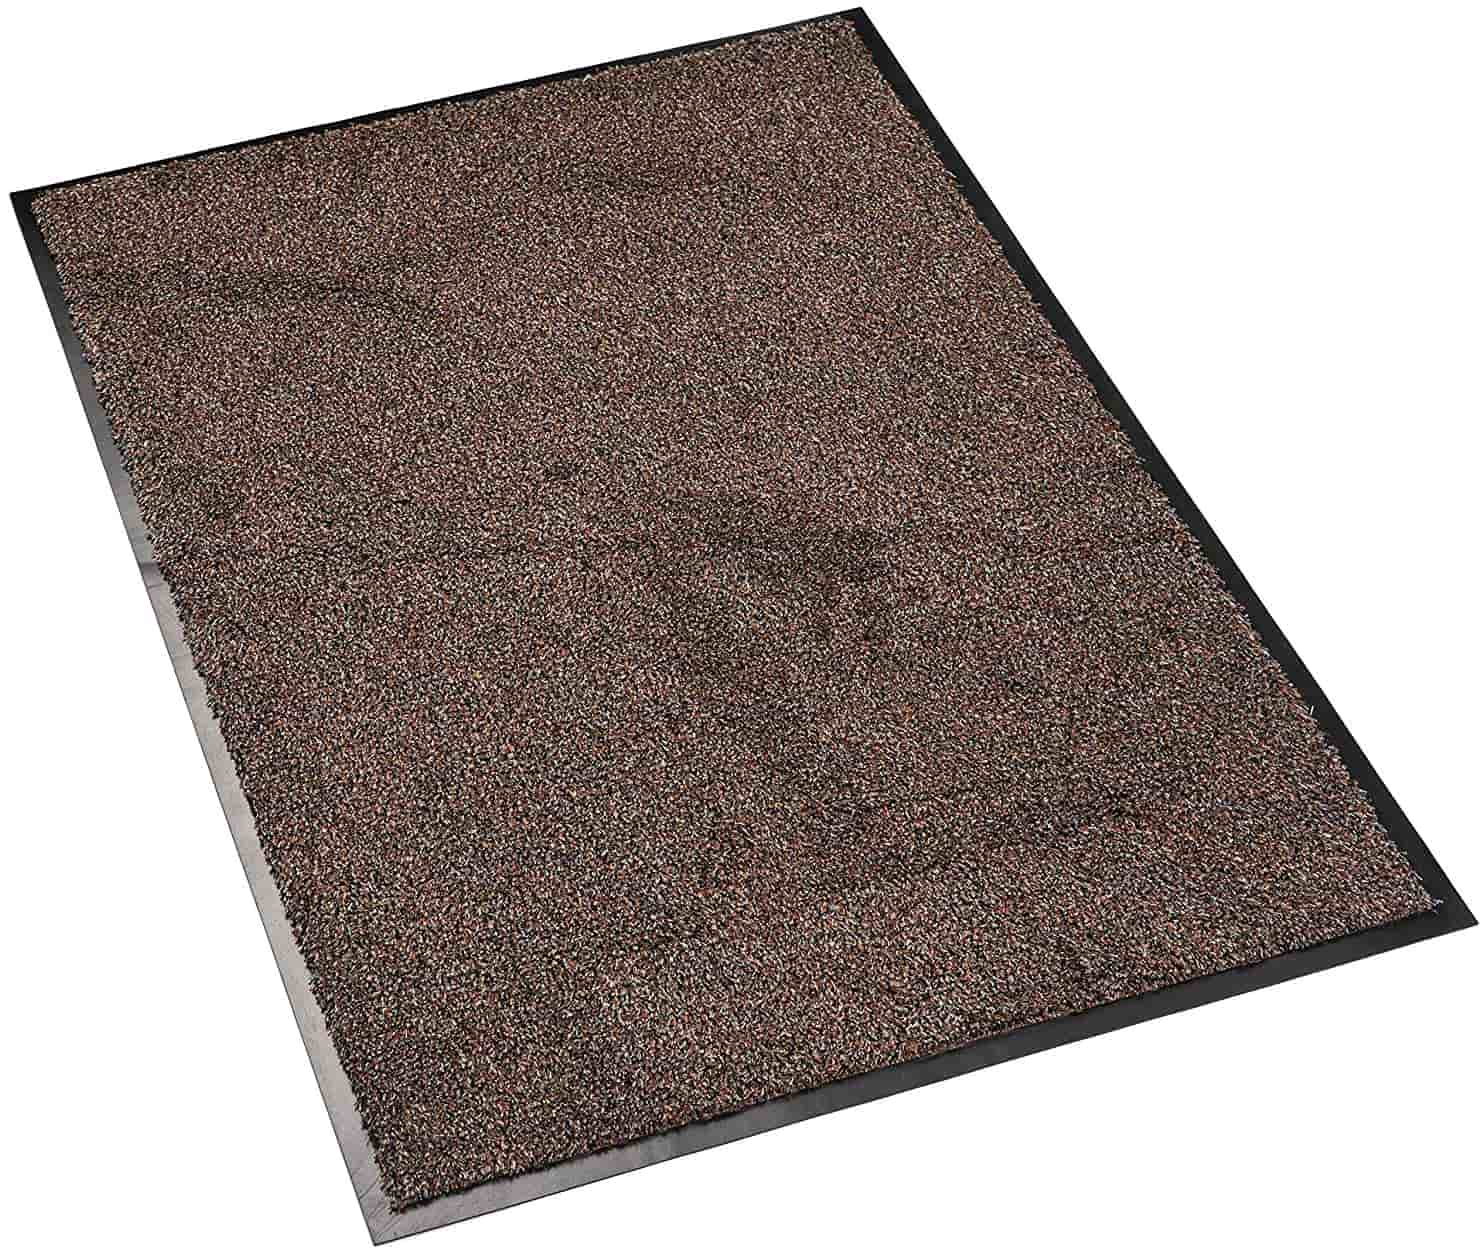 Dandy Washamat Doormat 80 x 50cm Copper Fleck William Armes Cotton with Vinyl/Rubber Backing 